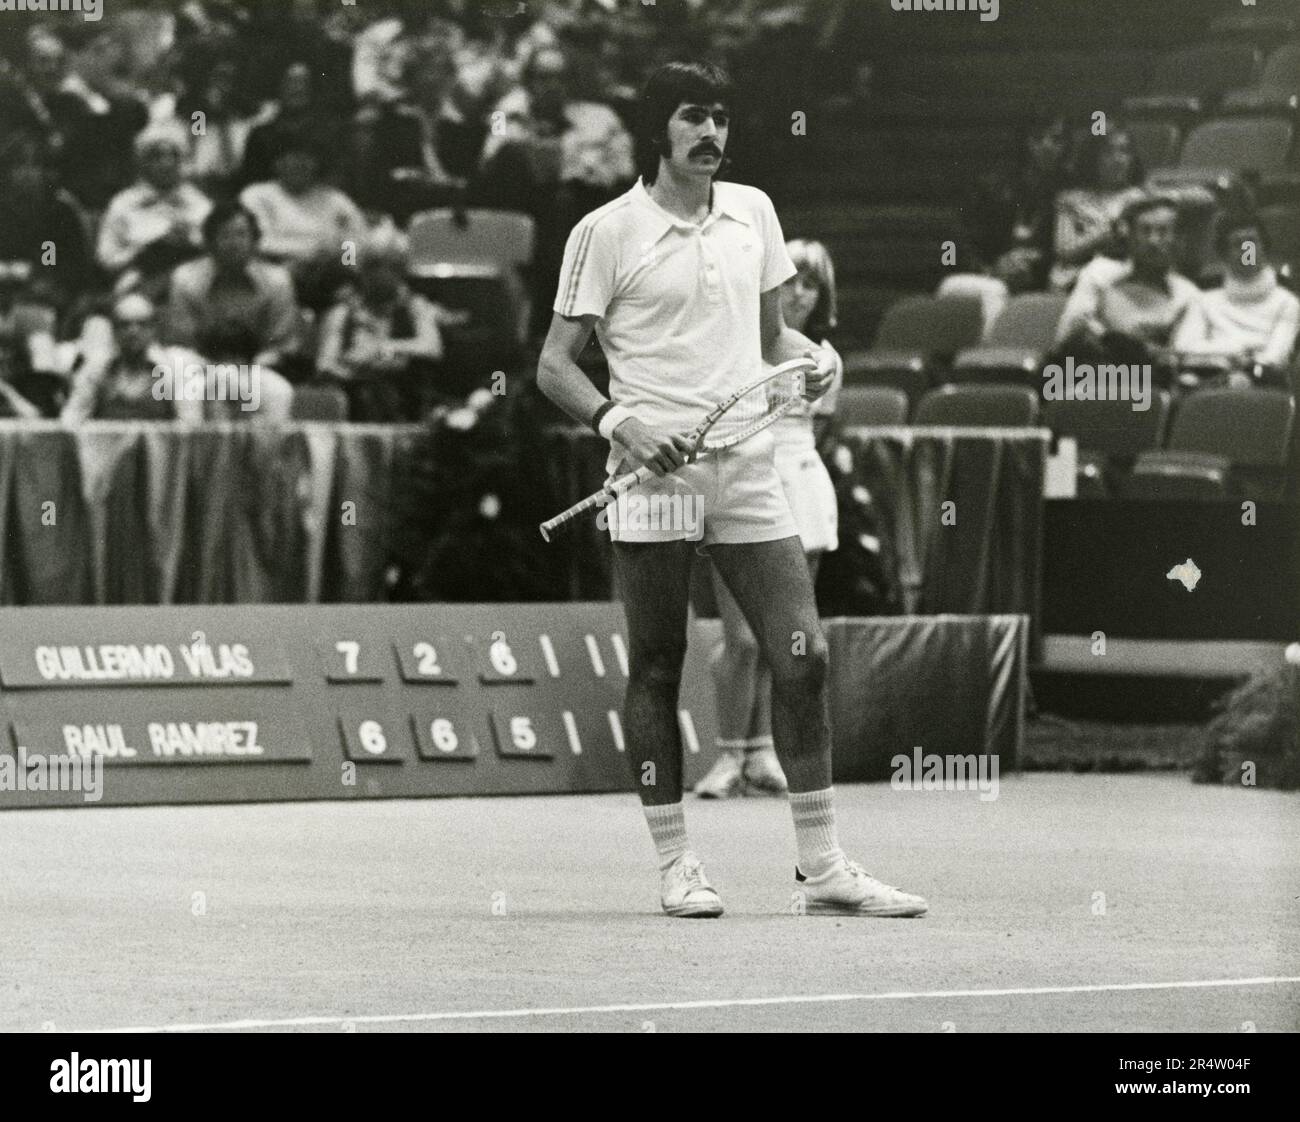 Mexican tennis player Raul Ramirez, 1970s Stock Photo